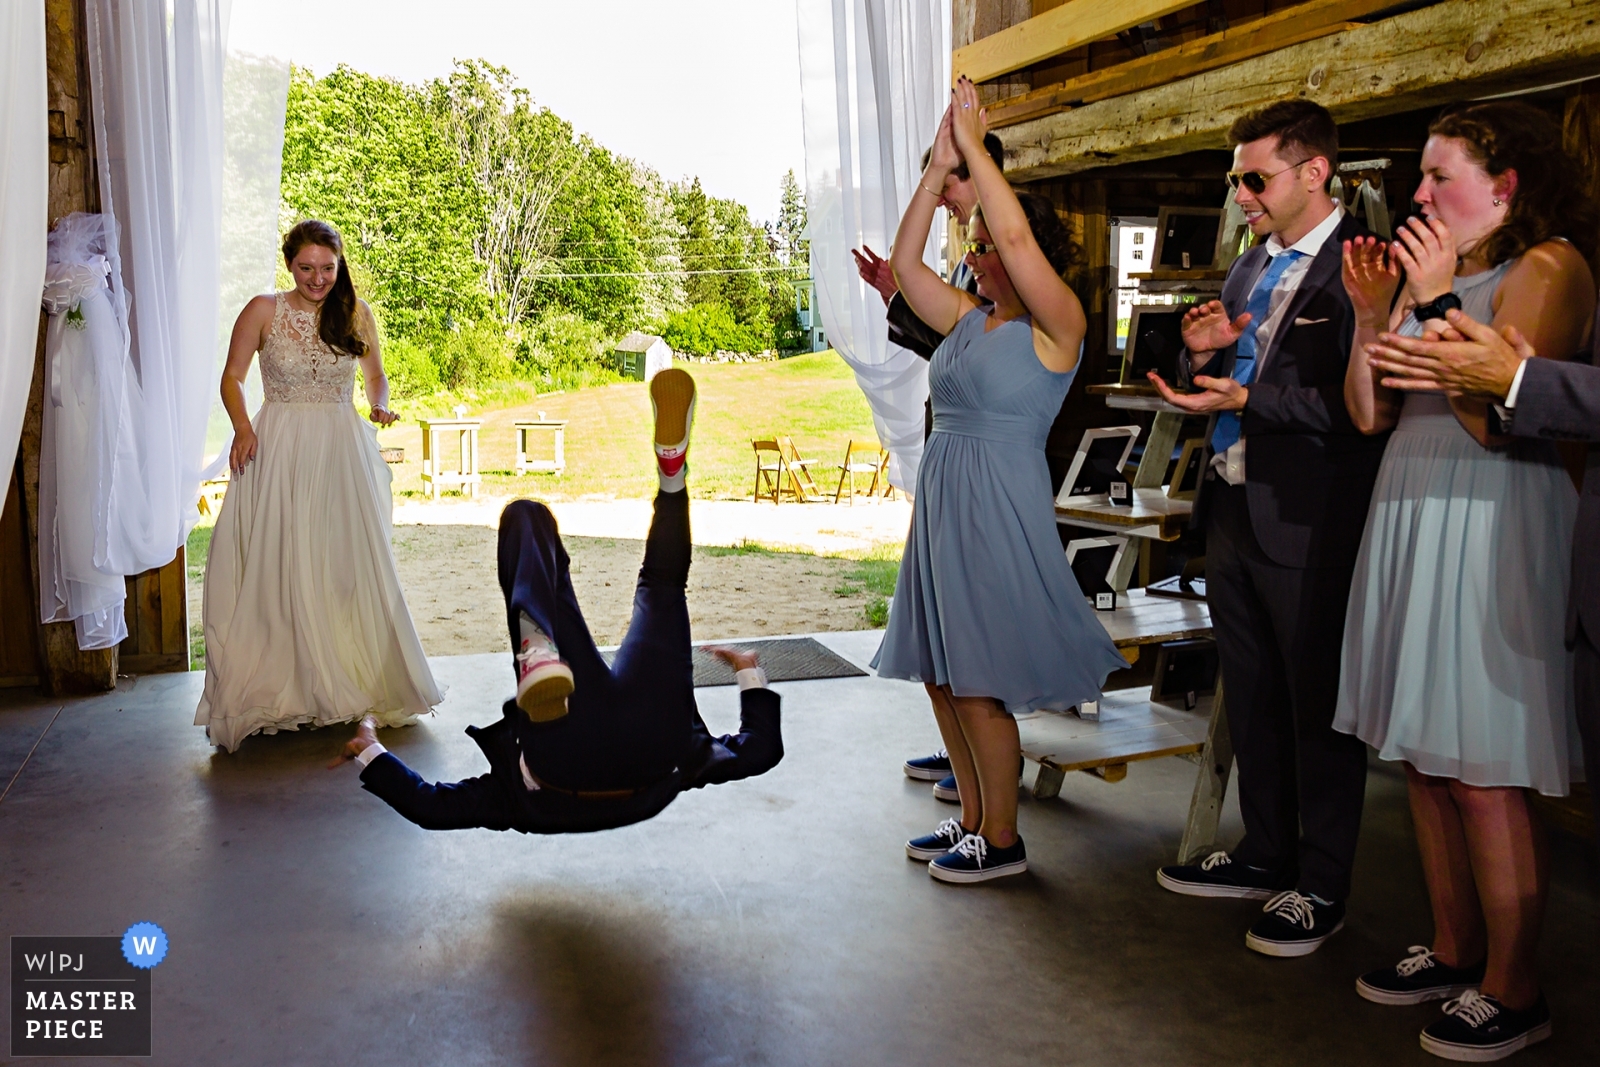 Kitz Farm Wedding Photographer captures award winning photo of the groom flipping into the reception